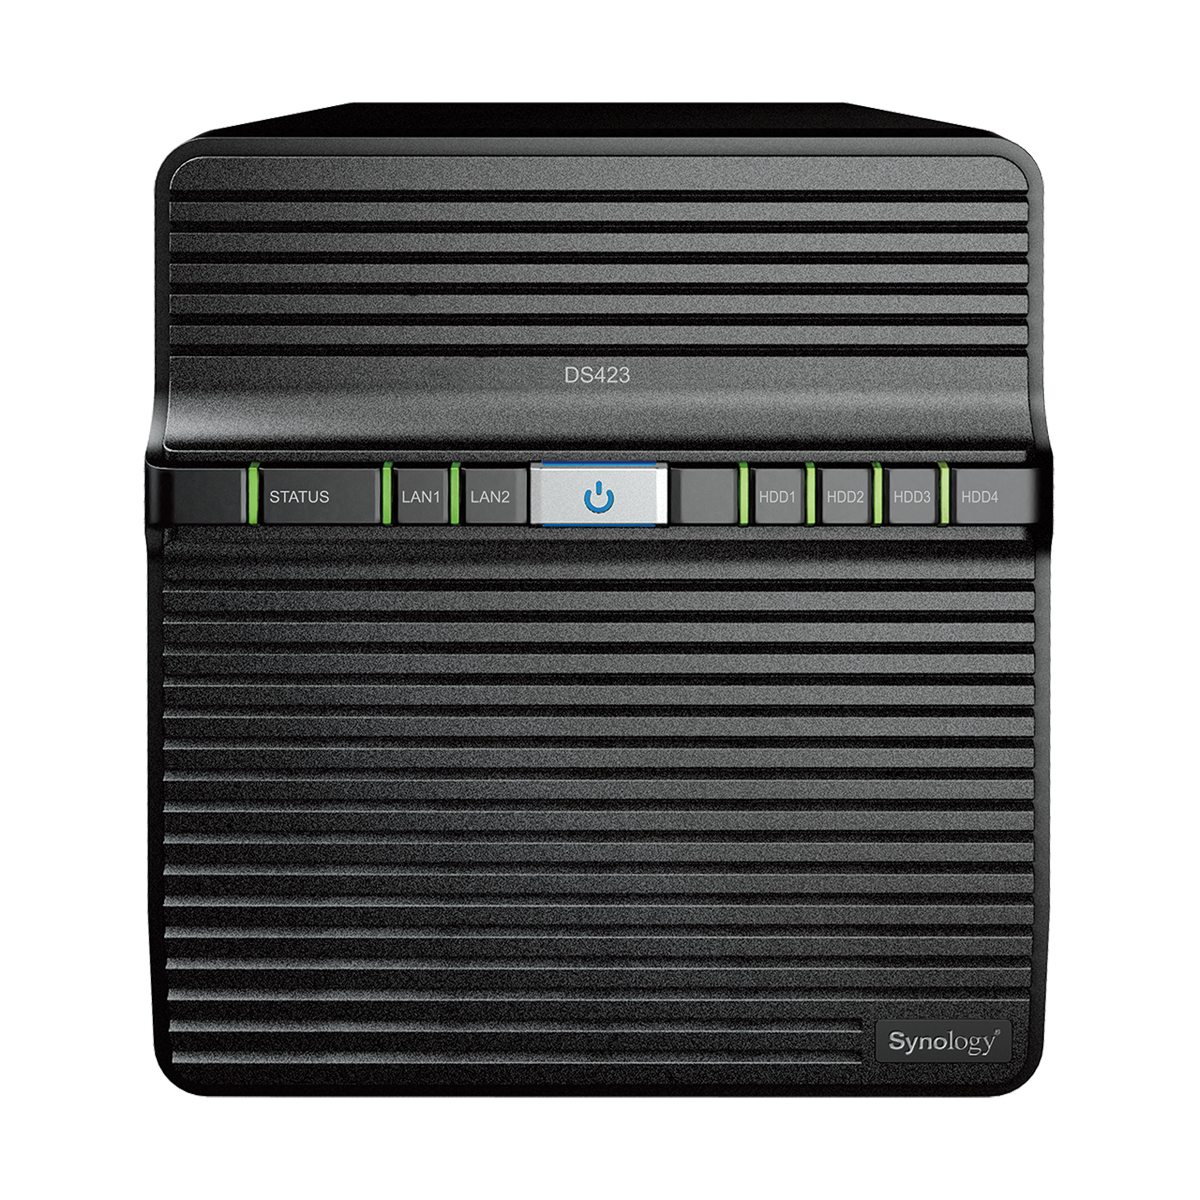 Synology DiskStation DS423 NAS 4-Bay 0/4 HDD/SSD, 2x Gigabit LAN, 2x USB 3.0, 2GB RAM von Synology